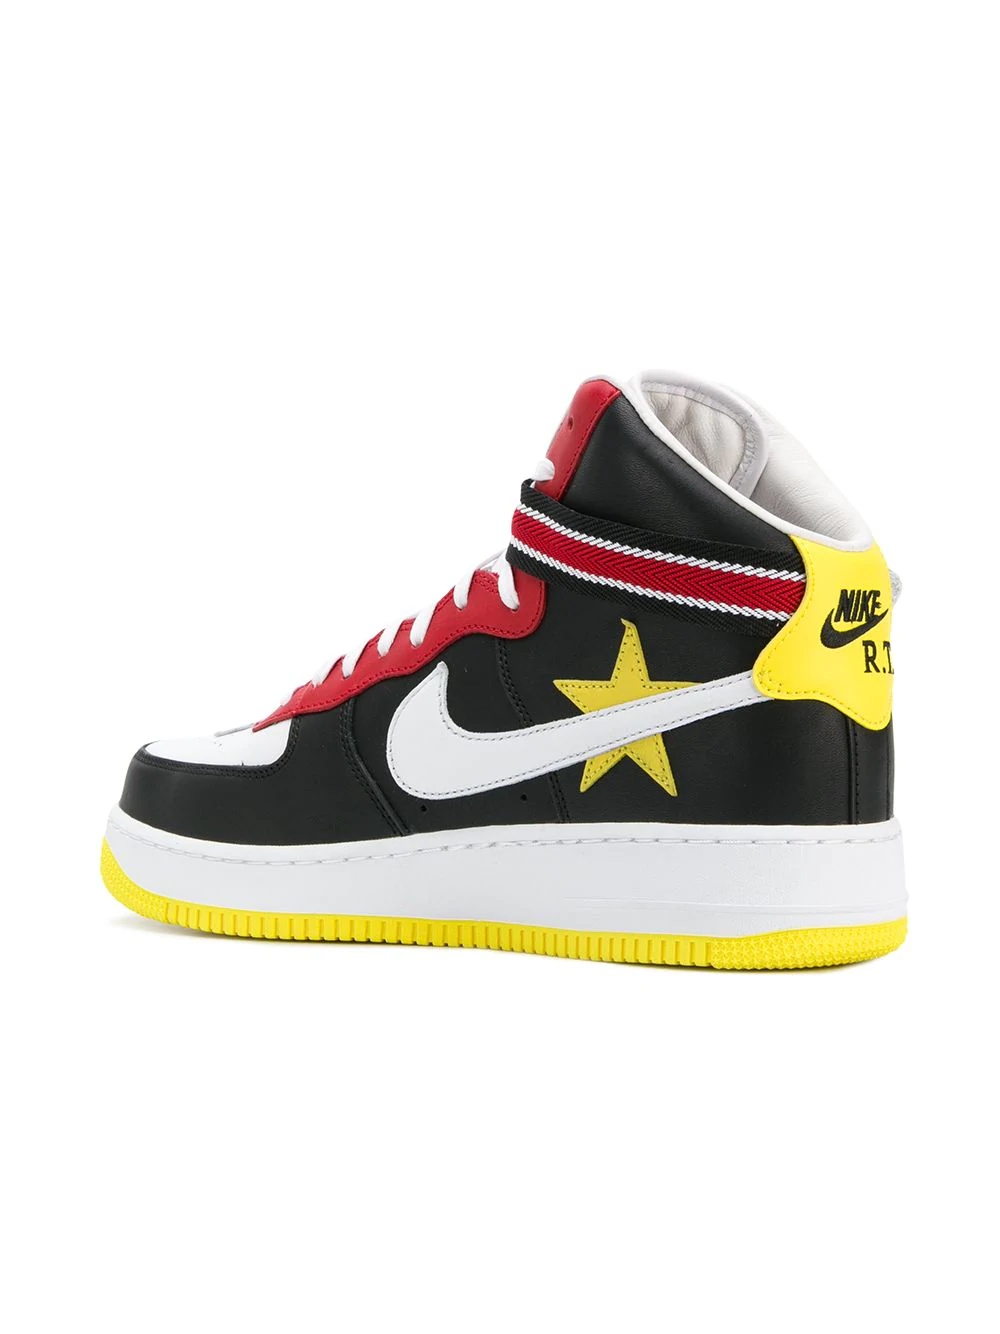 NikeLab x RT Air Force 1 High sneakers - 3